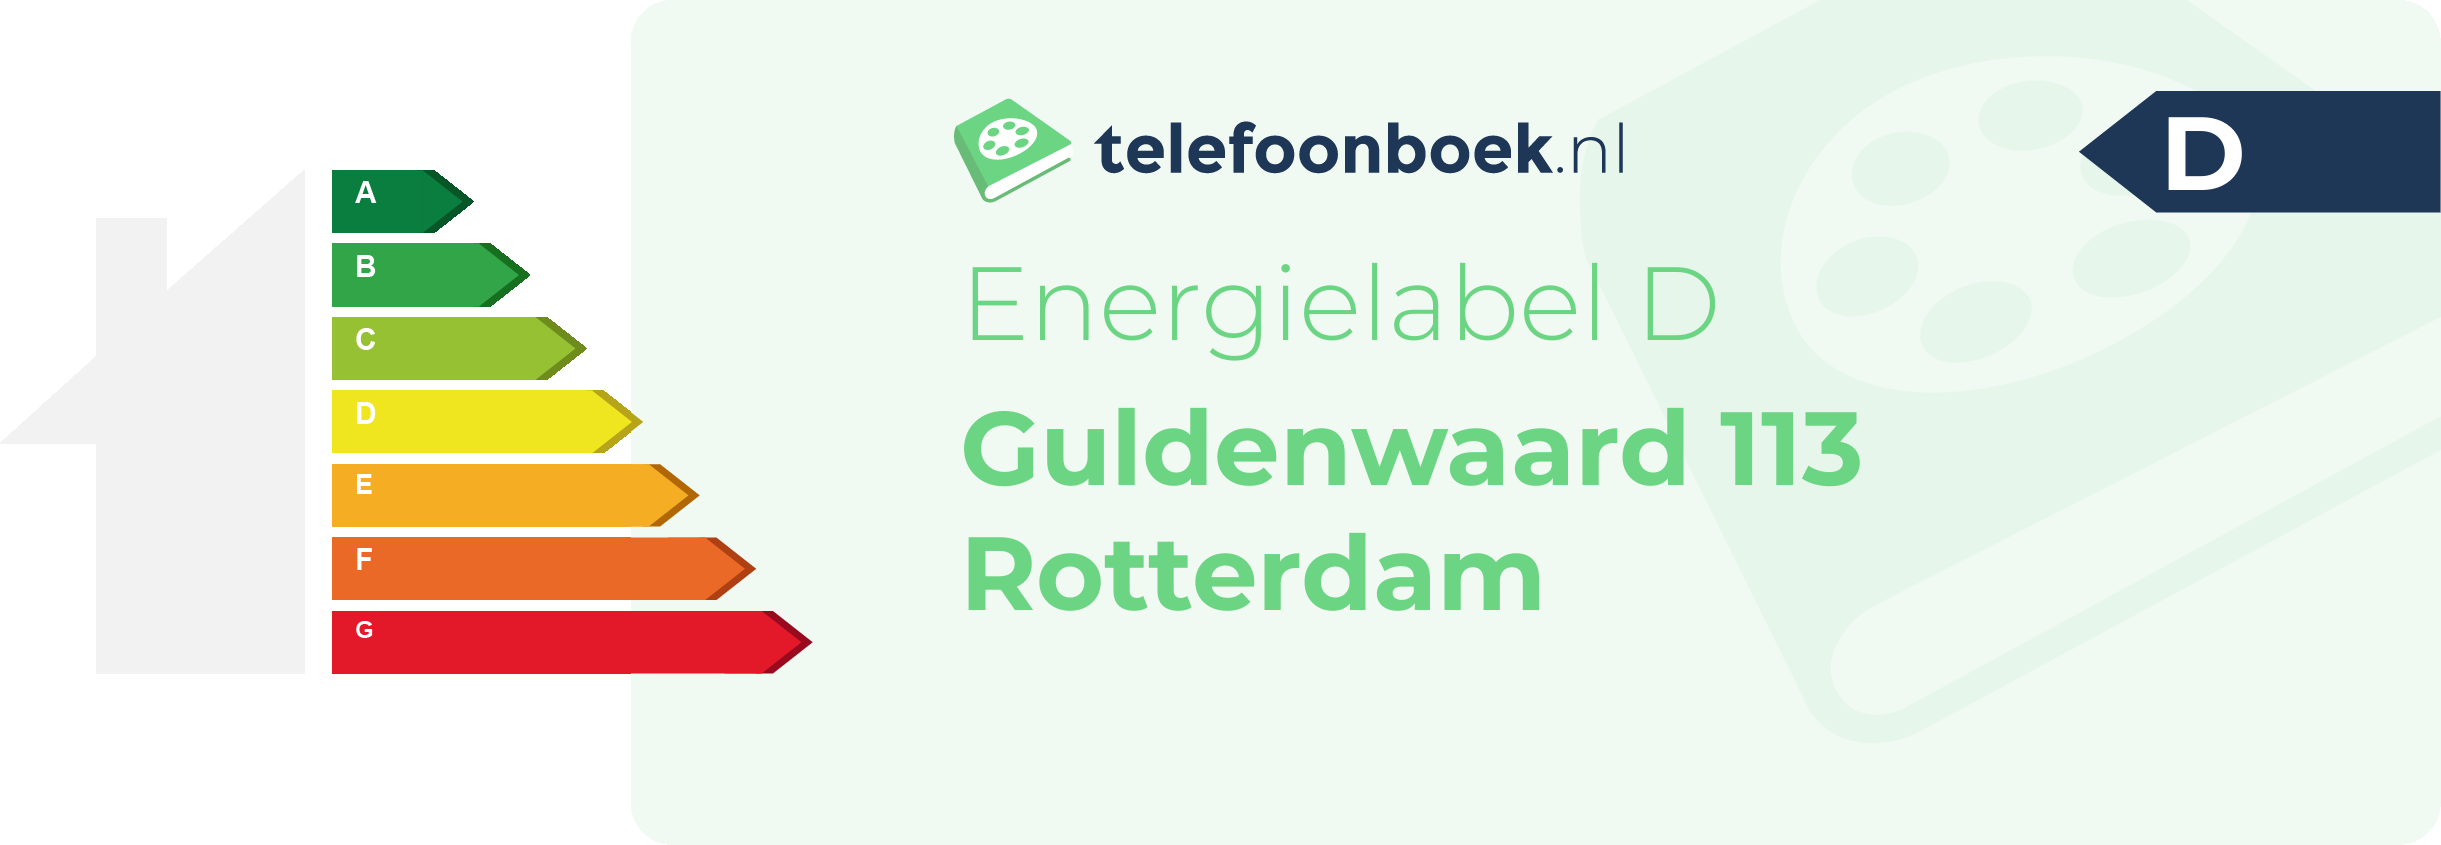 Energielabel Guldenwaard 113 Rotterdam